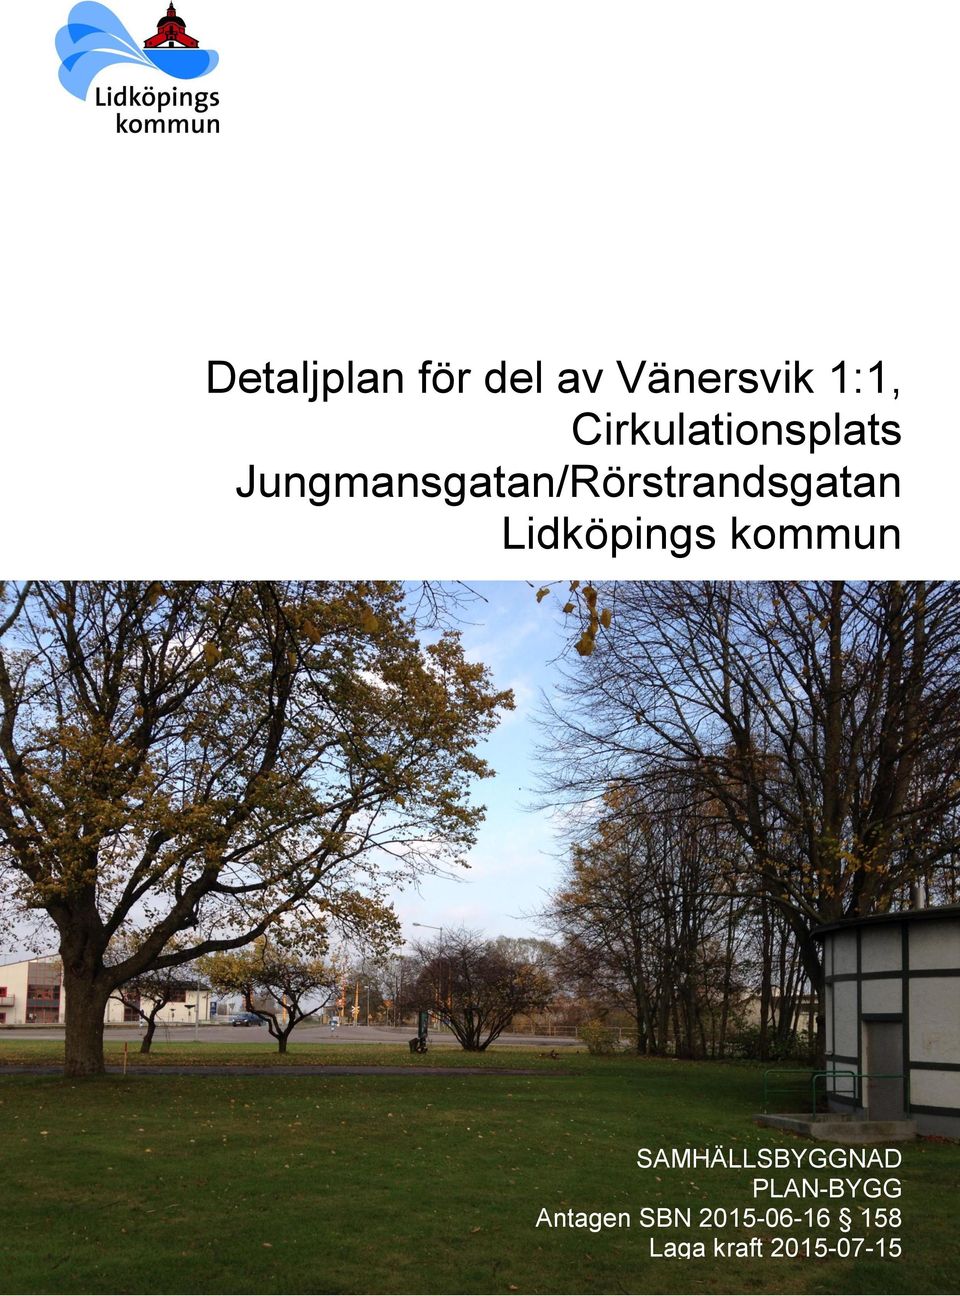 Jungmansgatan/Rörstrandsgatan Lidköpings